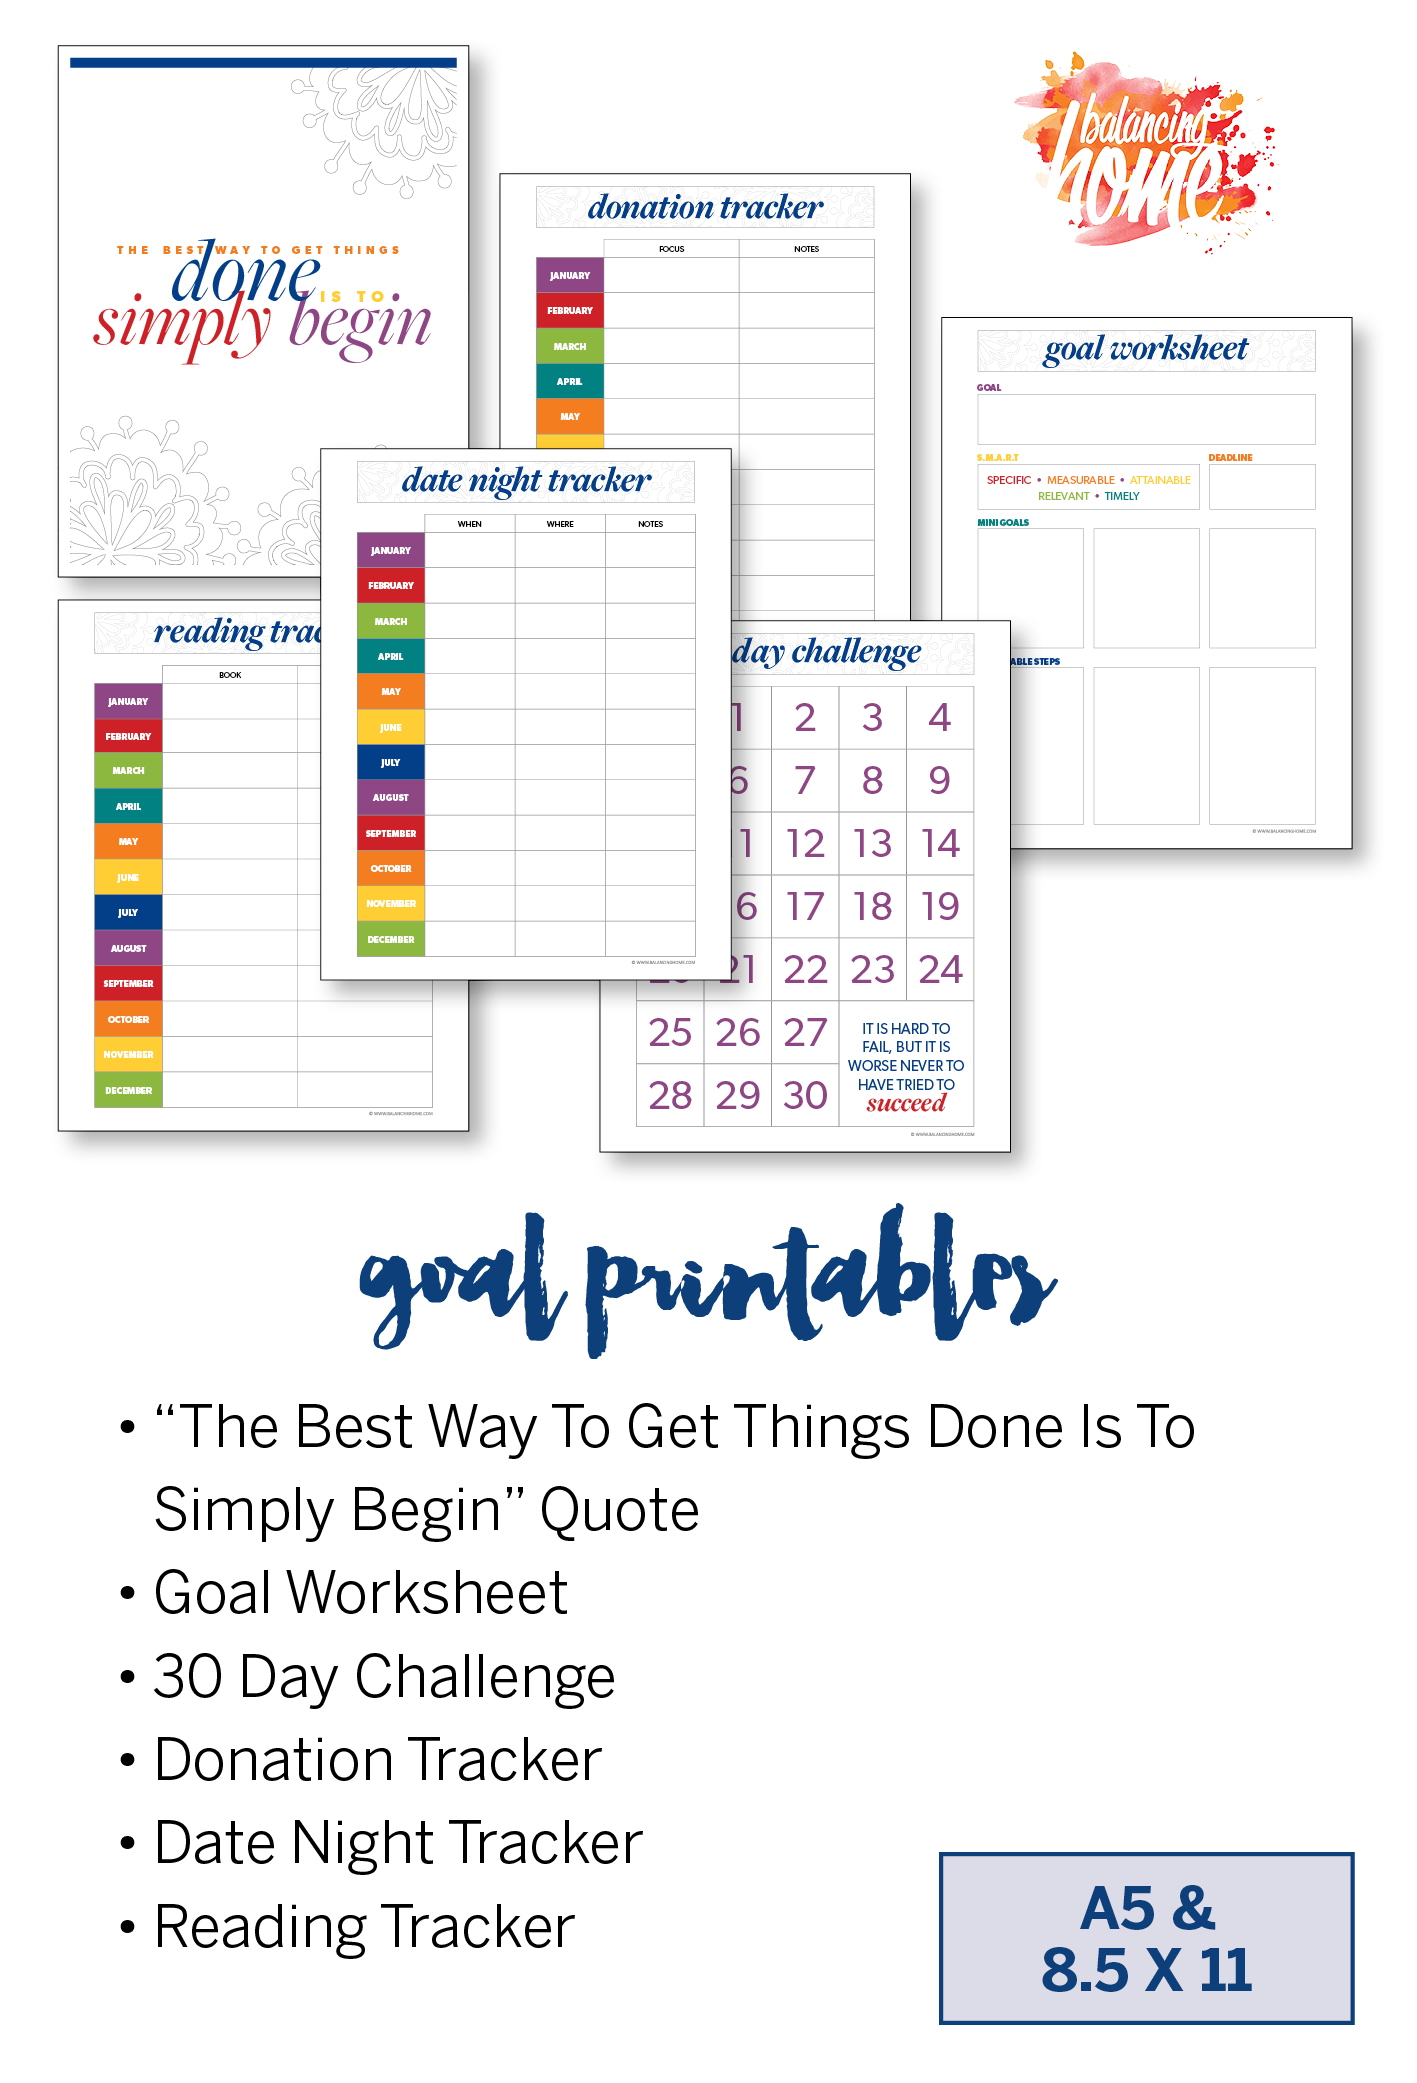 Goals worksheet and other goal printables